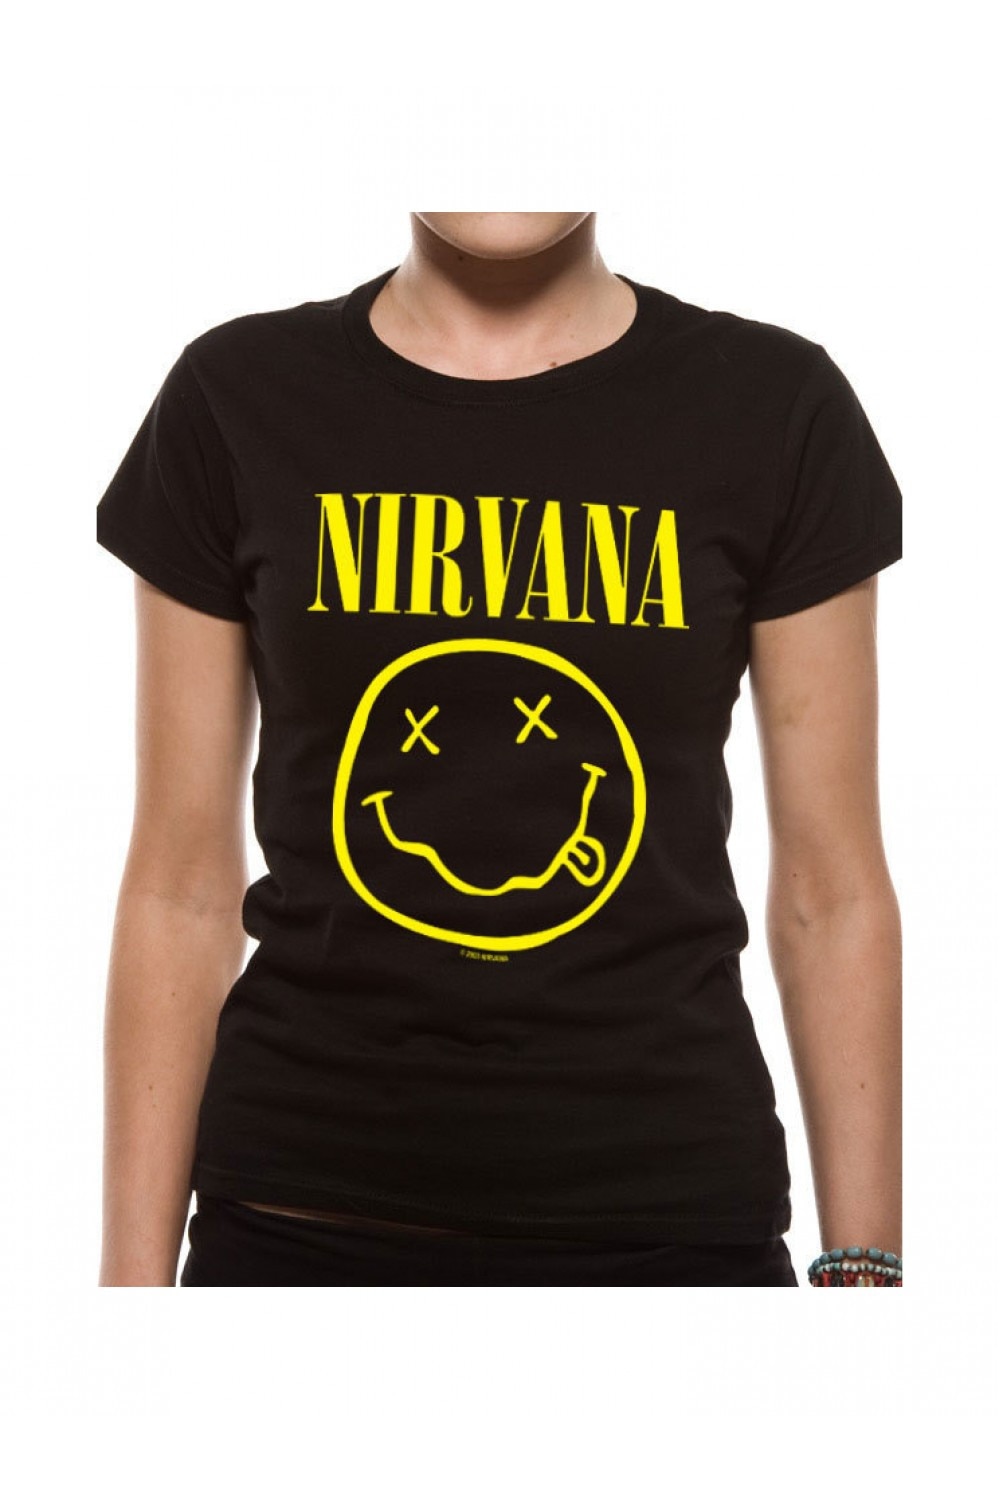 Nirvana t. Футболка Nirvana. Футболка i Nirvana Bershka. Нирвана футболка оригинал. Женская футболка Nirvana.